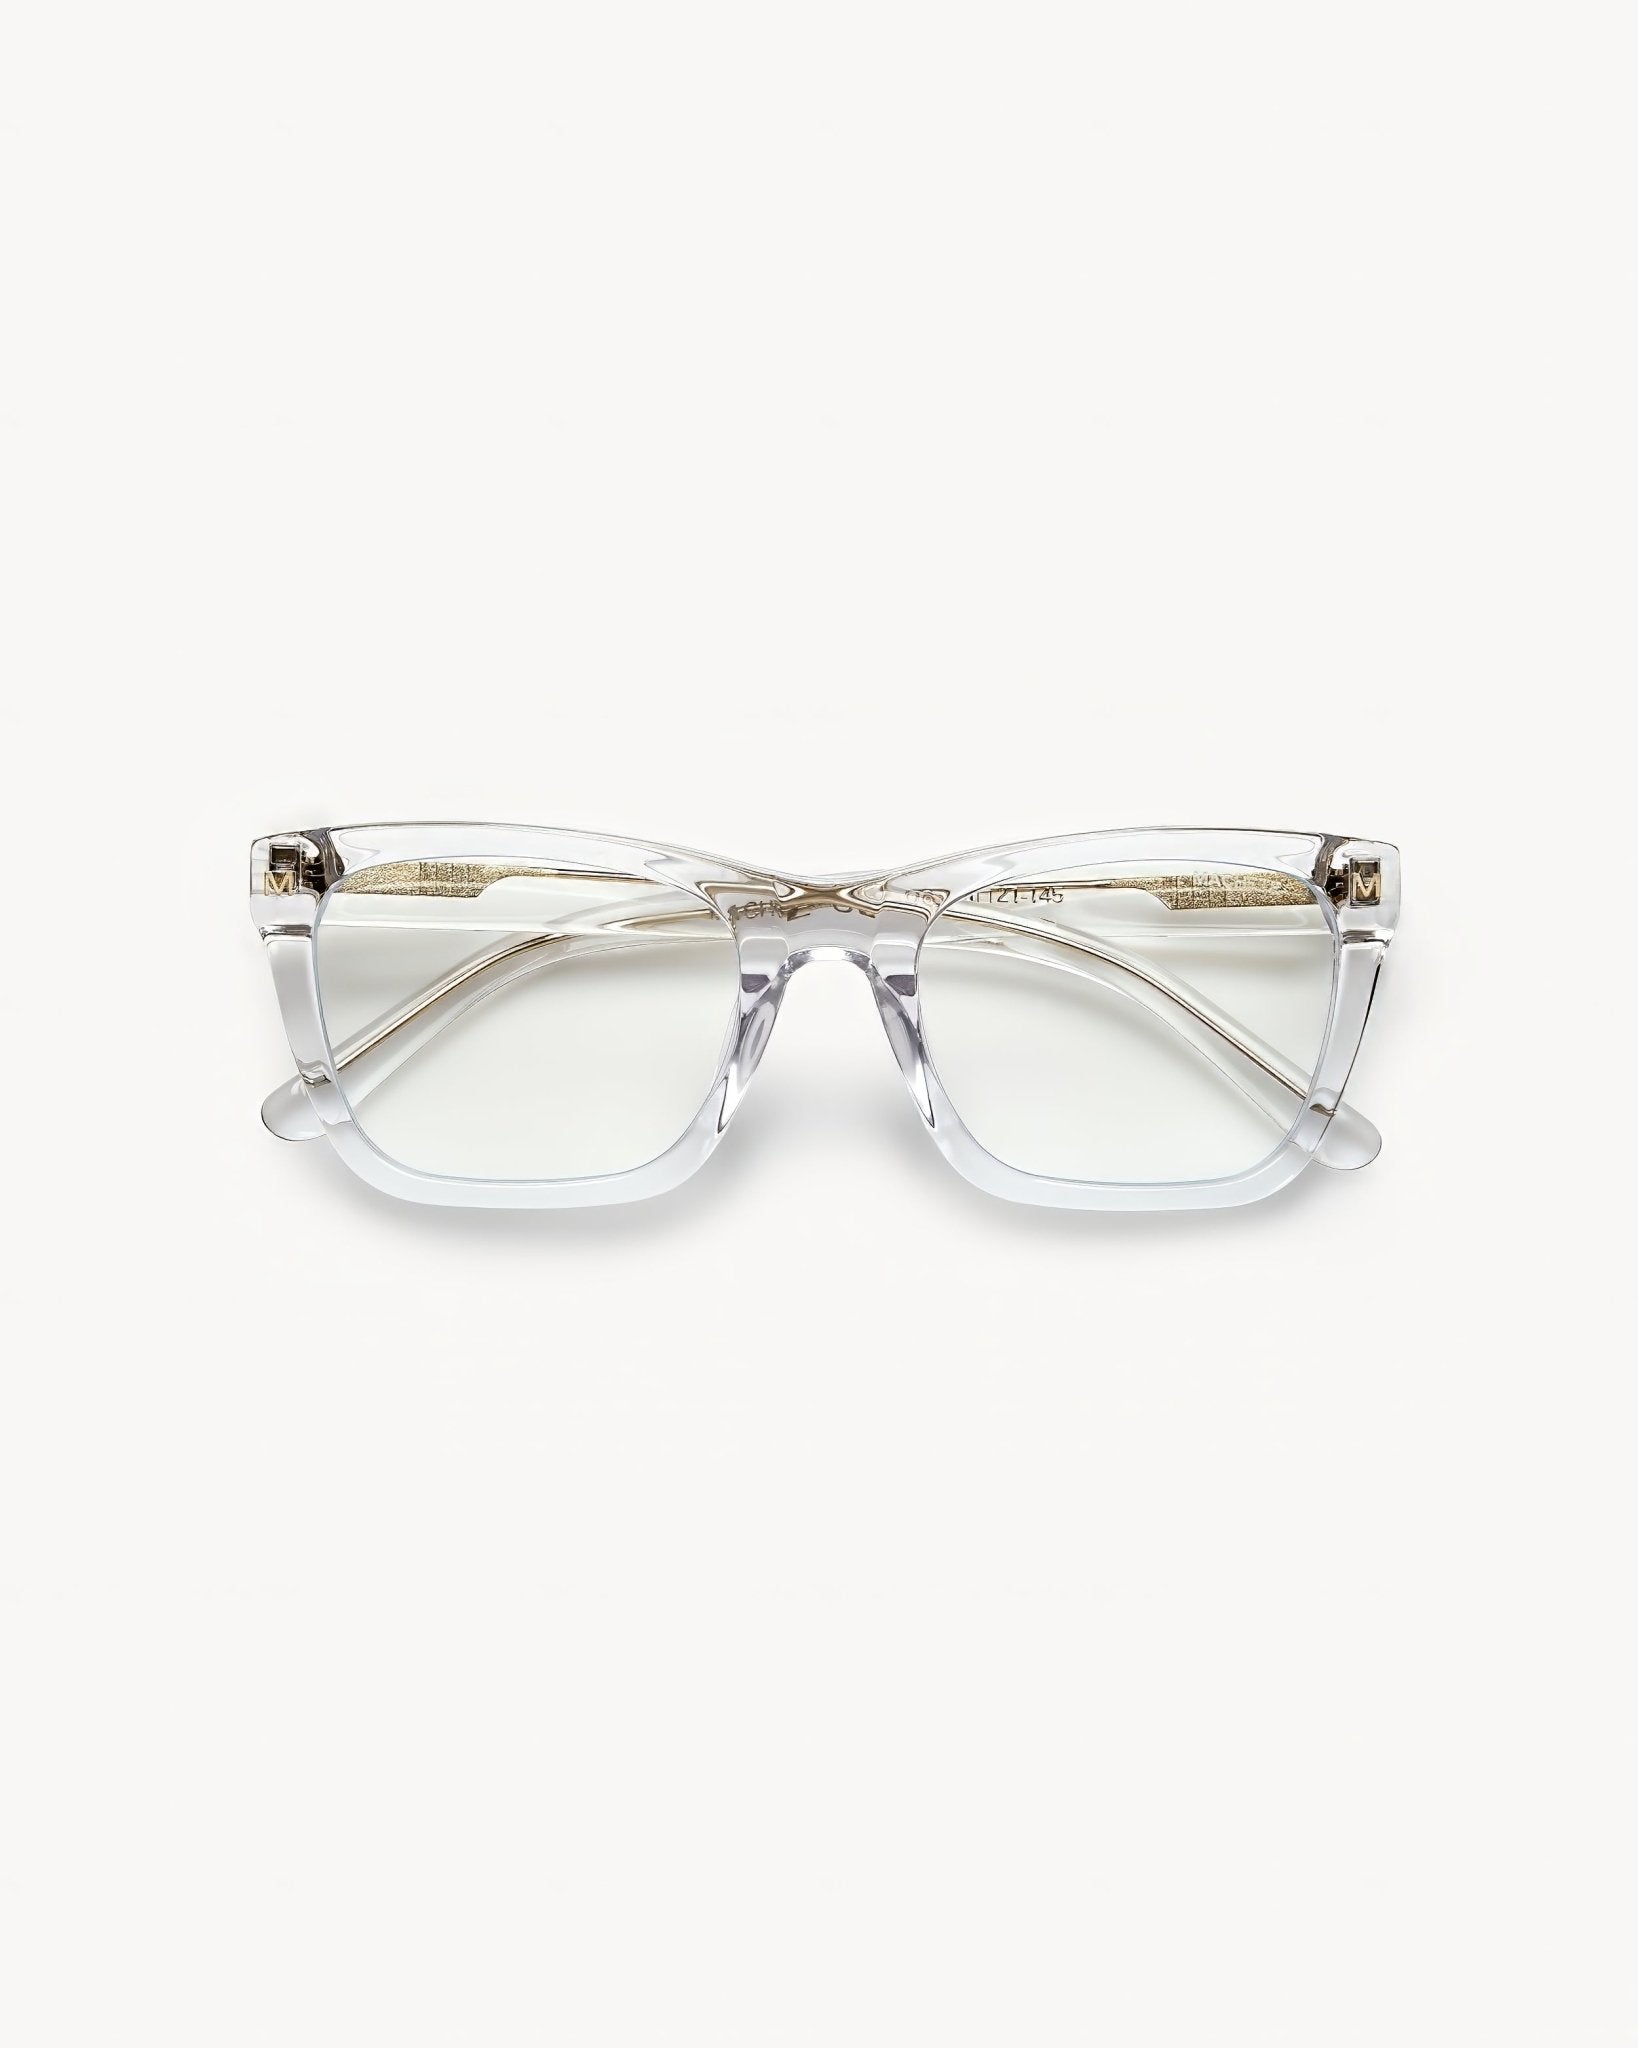 MACHETE Glasses in Clear